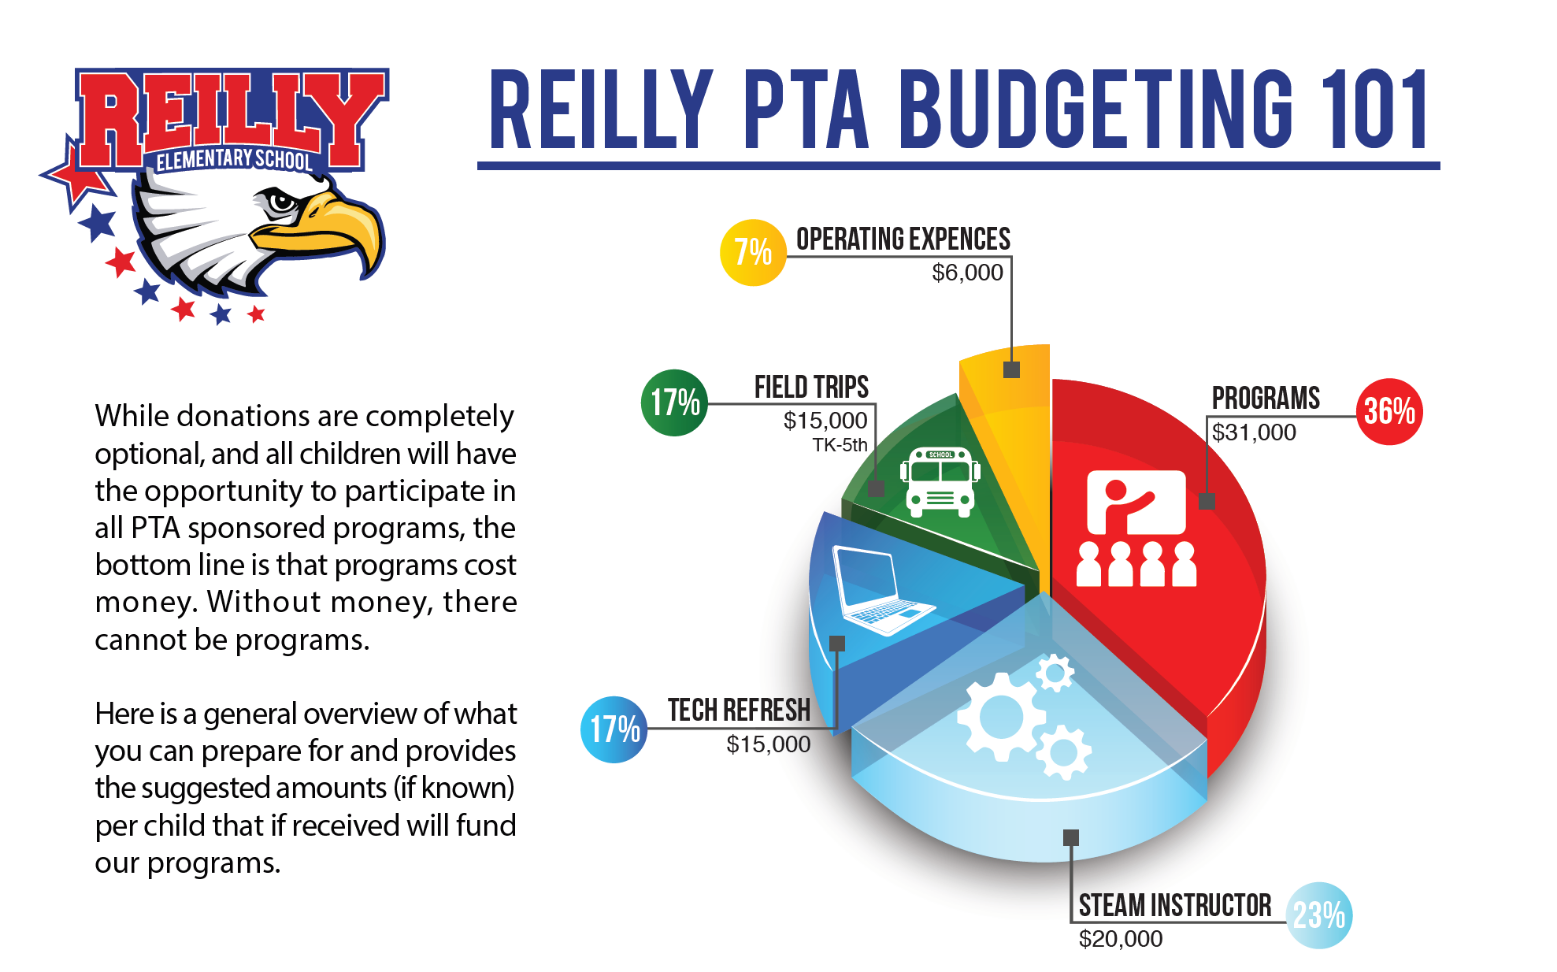 Reilly PTA Budgeting